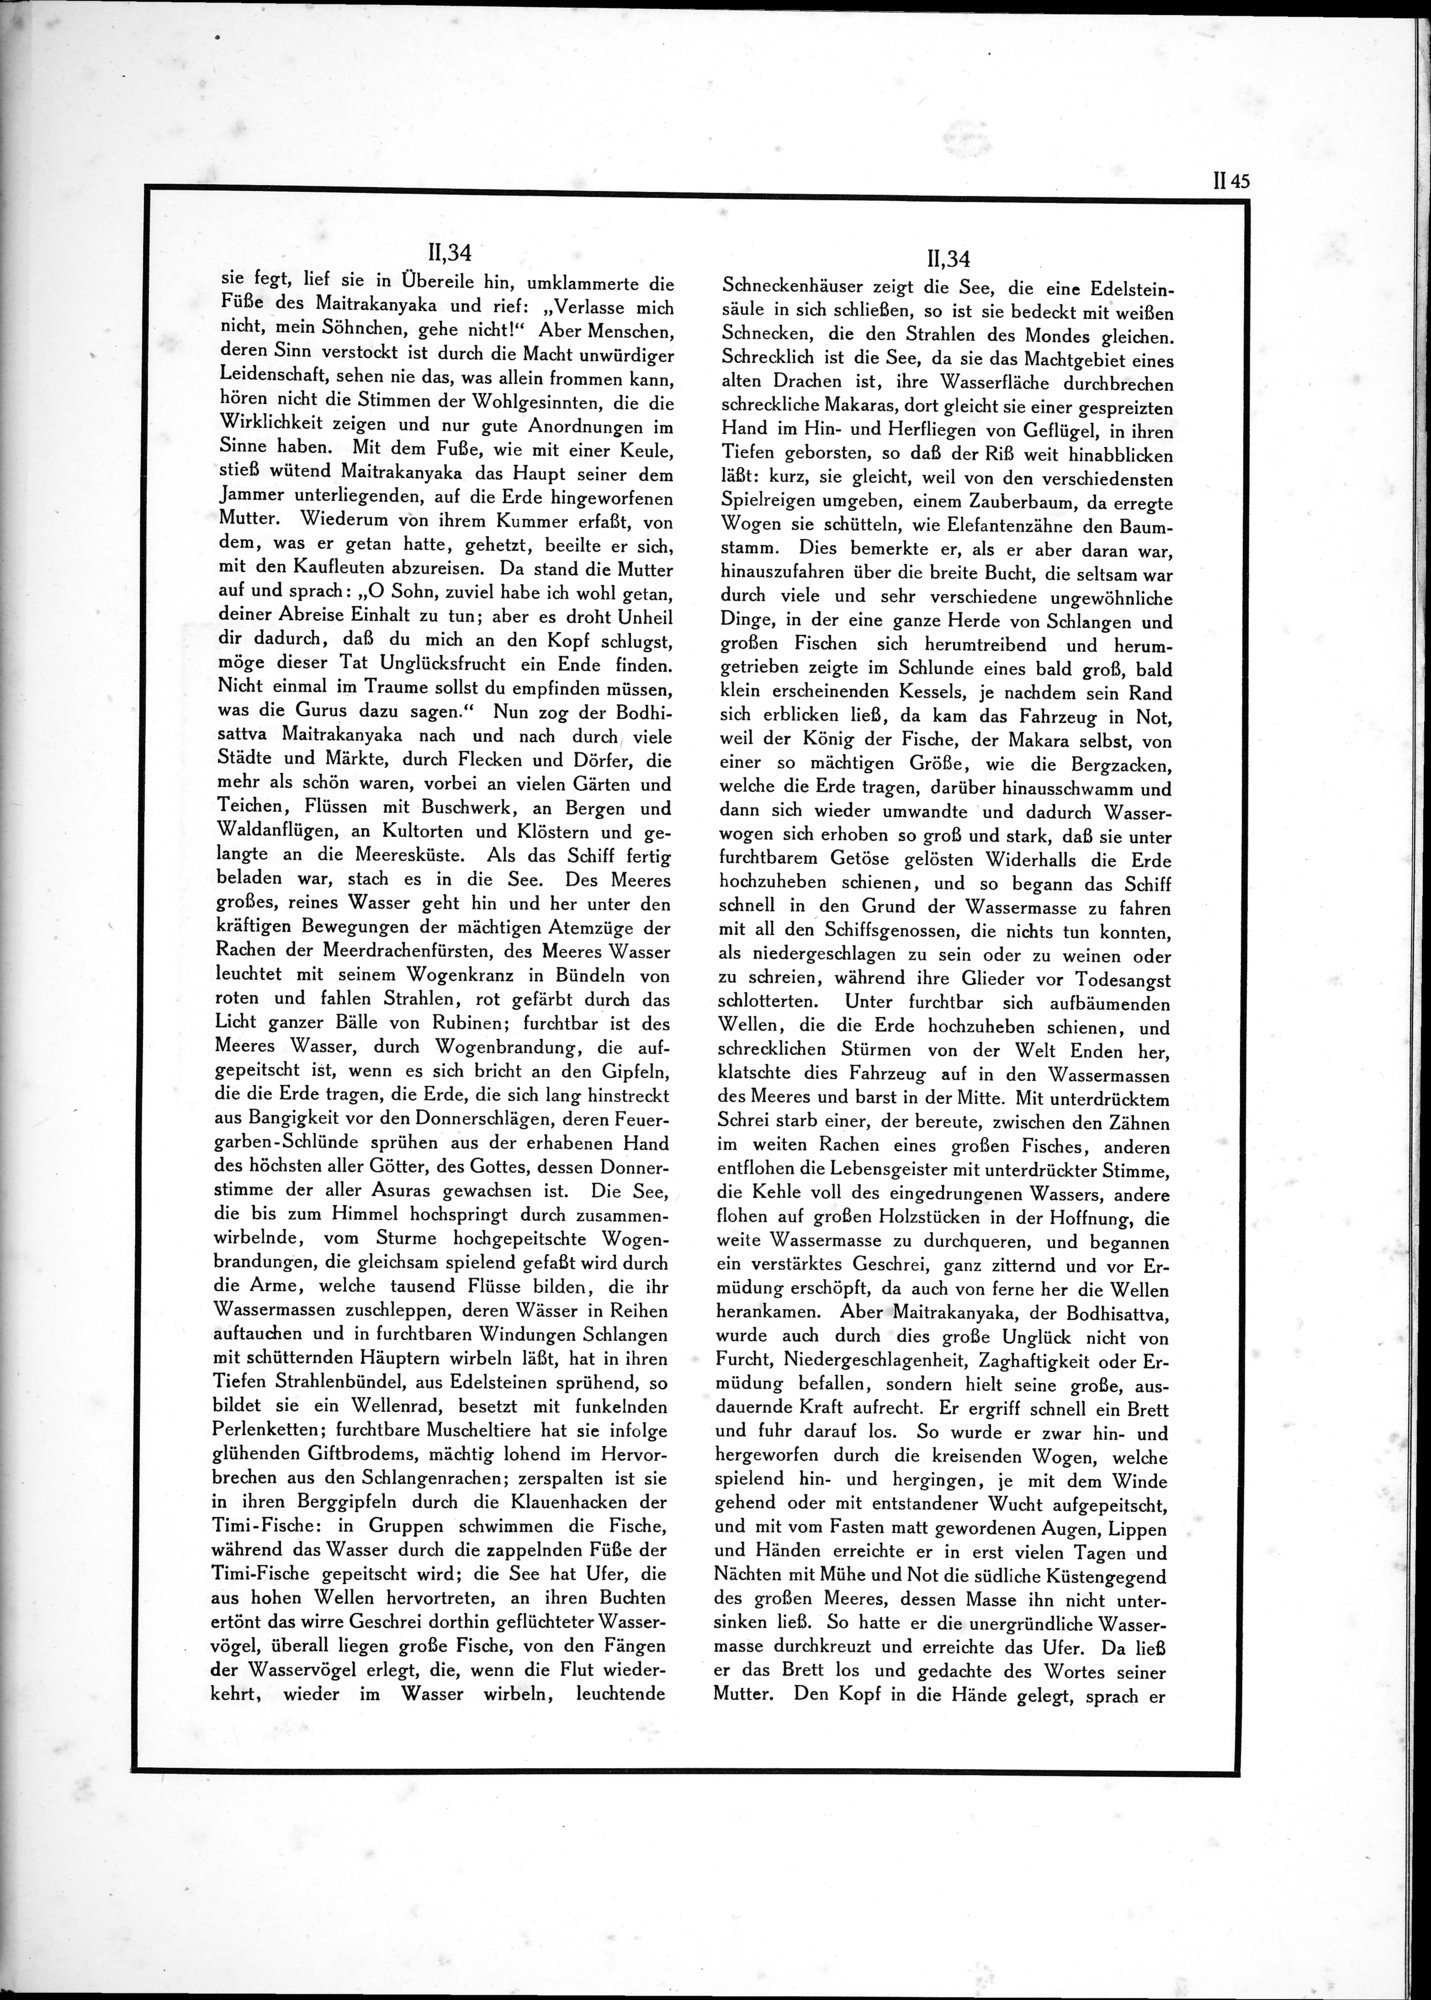 Alt-Kutscha : vol.1 / Page 151 (Grayscale High Resolution Image)